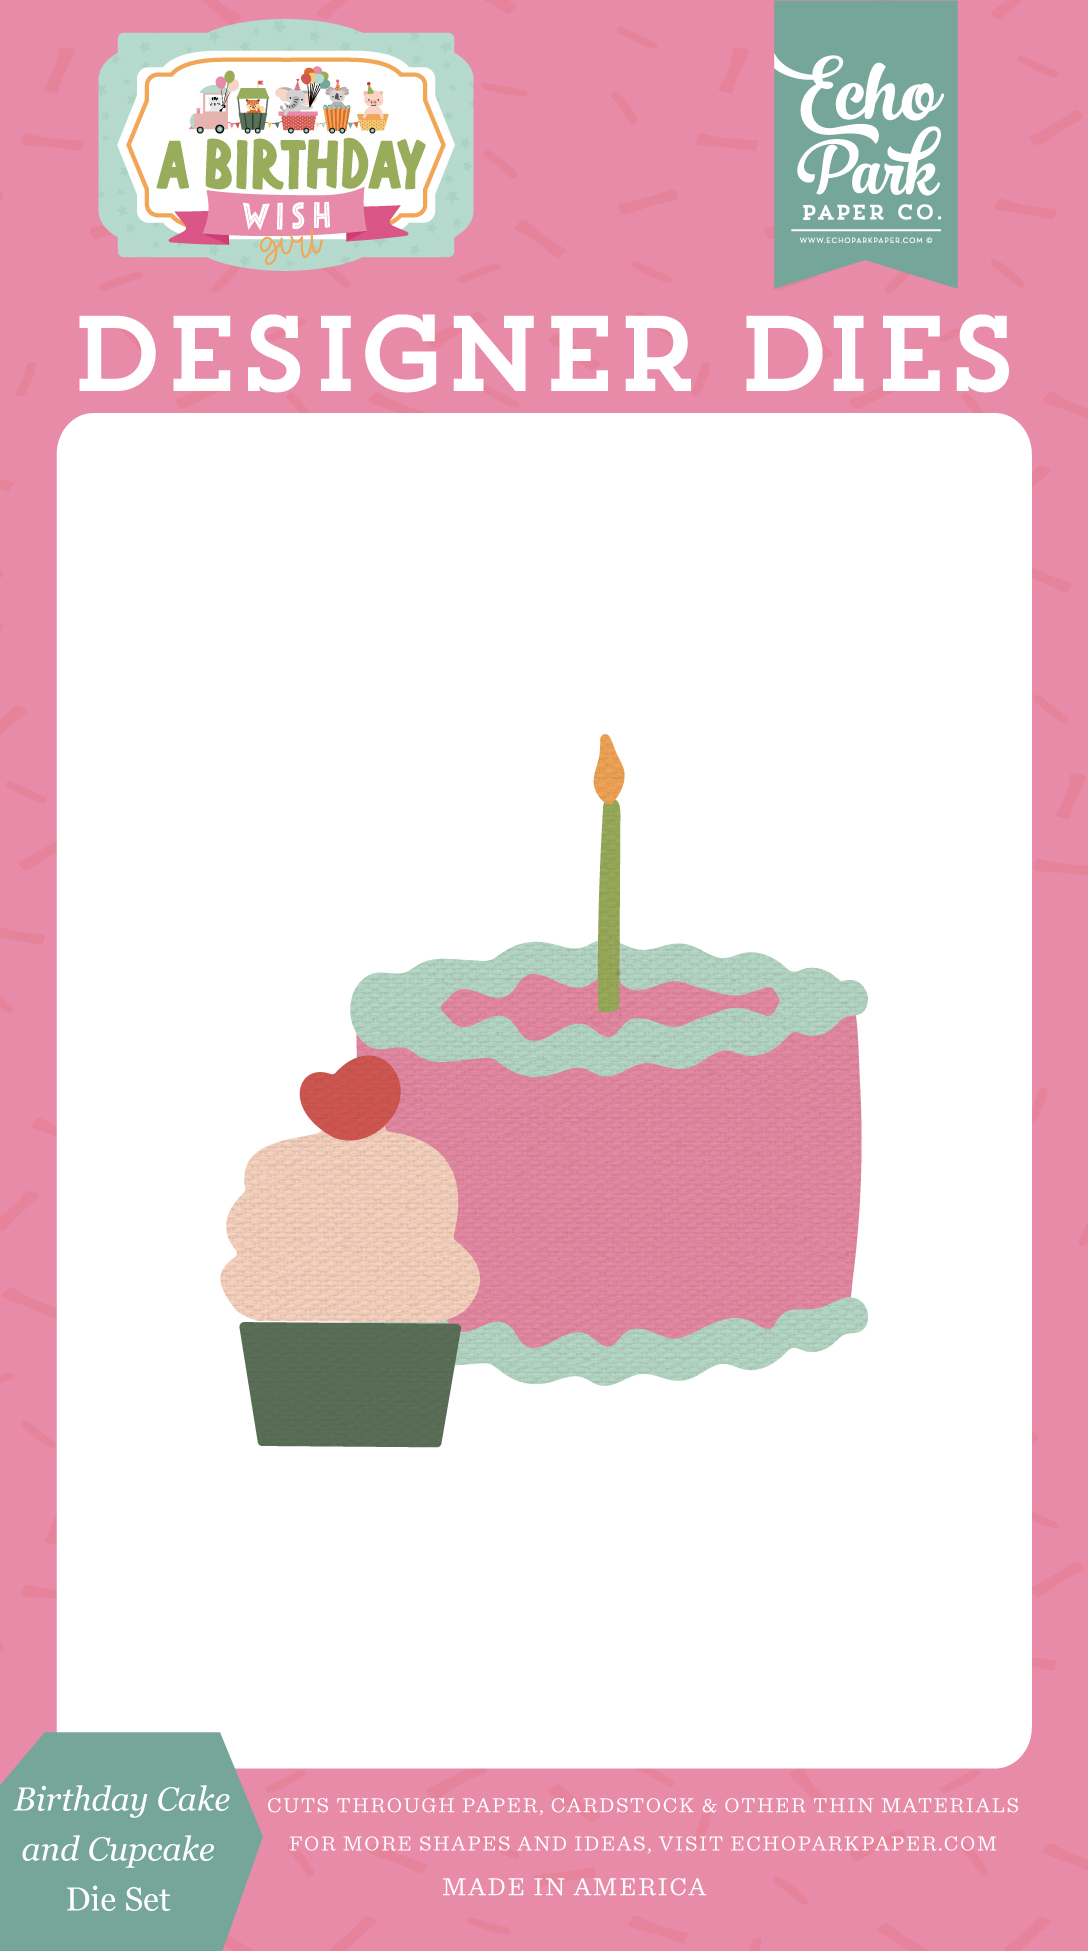 A Birthday Wish Girl: Birthday Cake and Cupcake Die Set